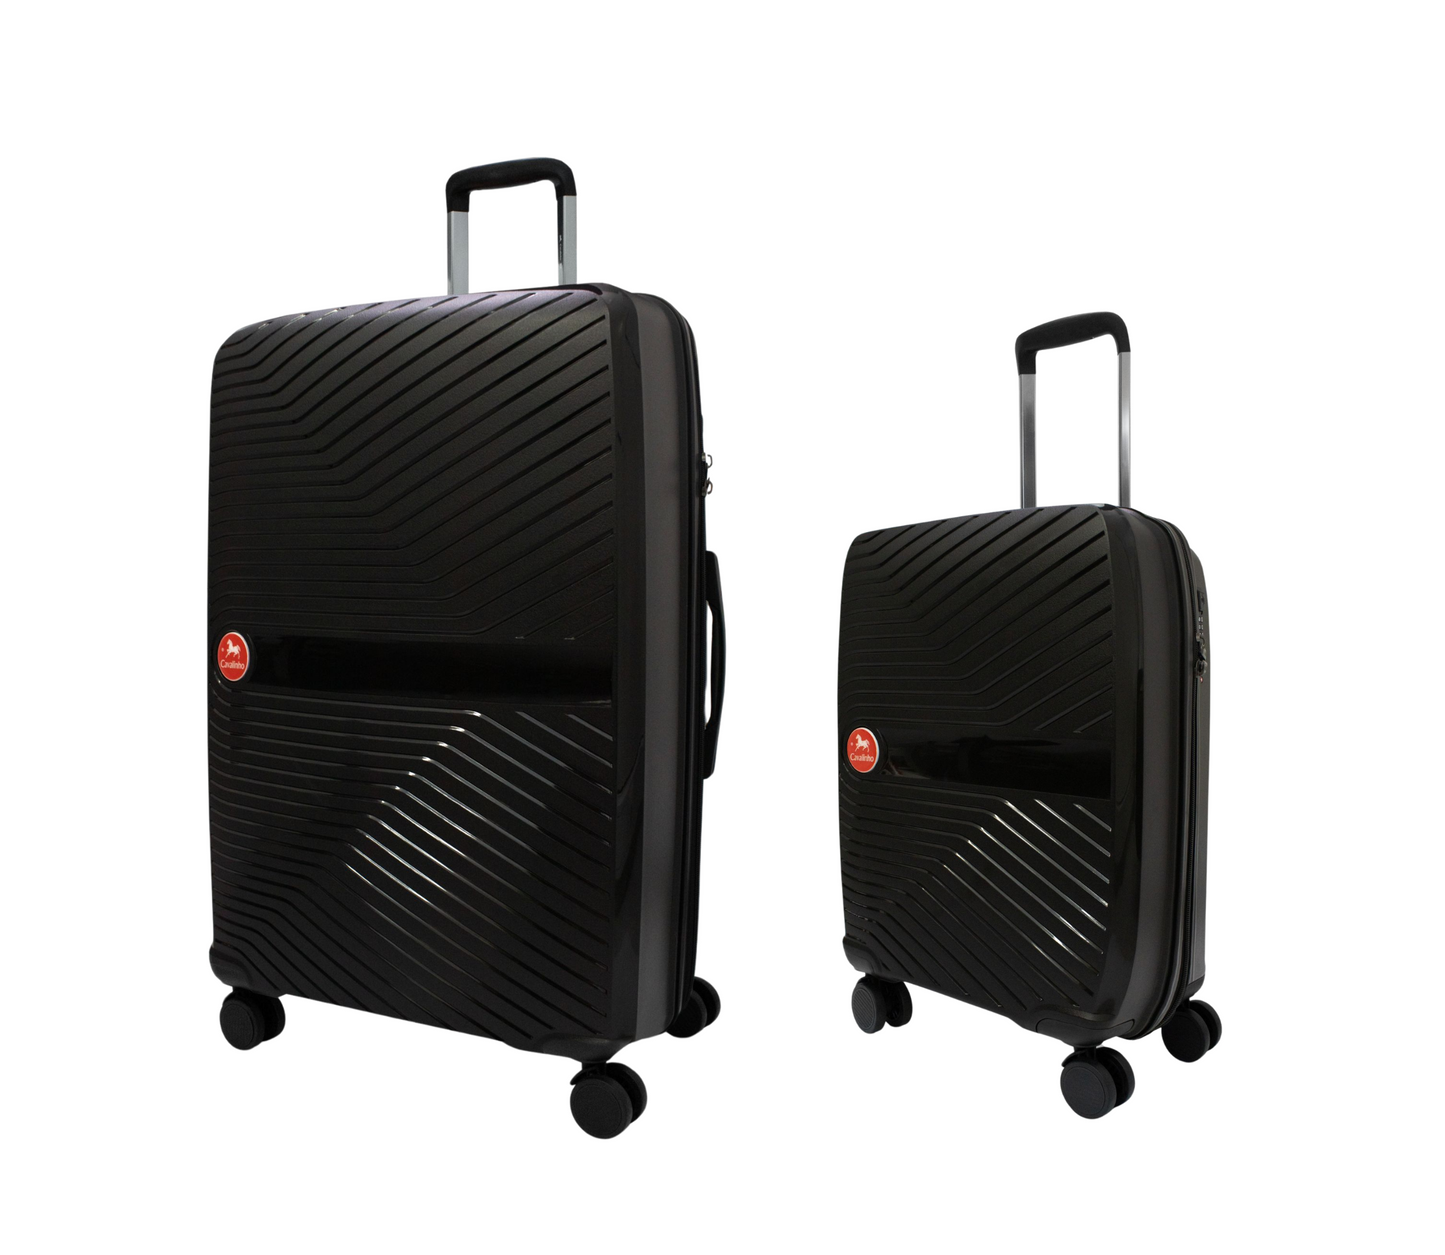 Cavalinho Colorful 2 Piece Luggage Set (19" & 28") - Black Black - 68020004.0101.S1928._2